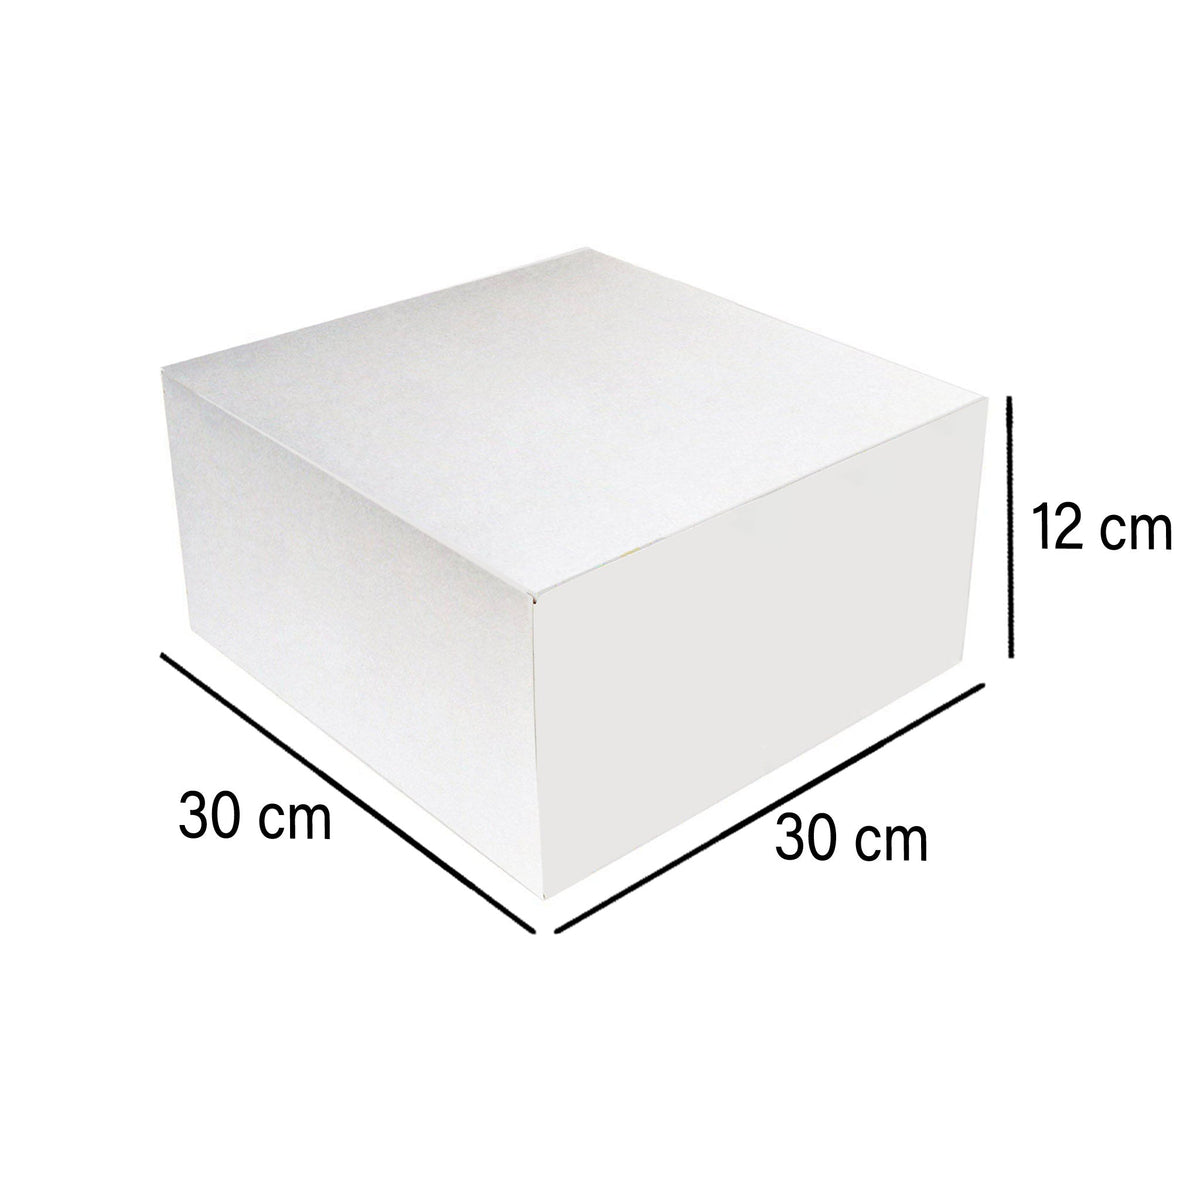  White Cake Box